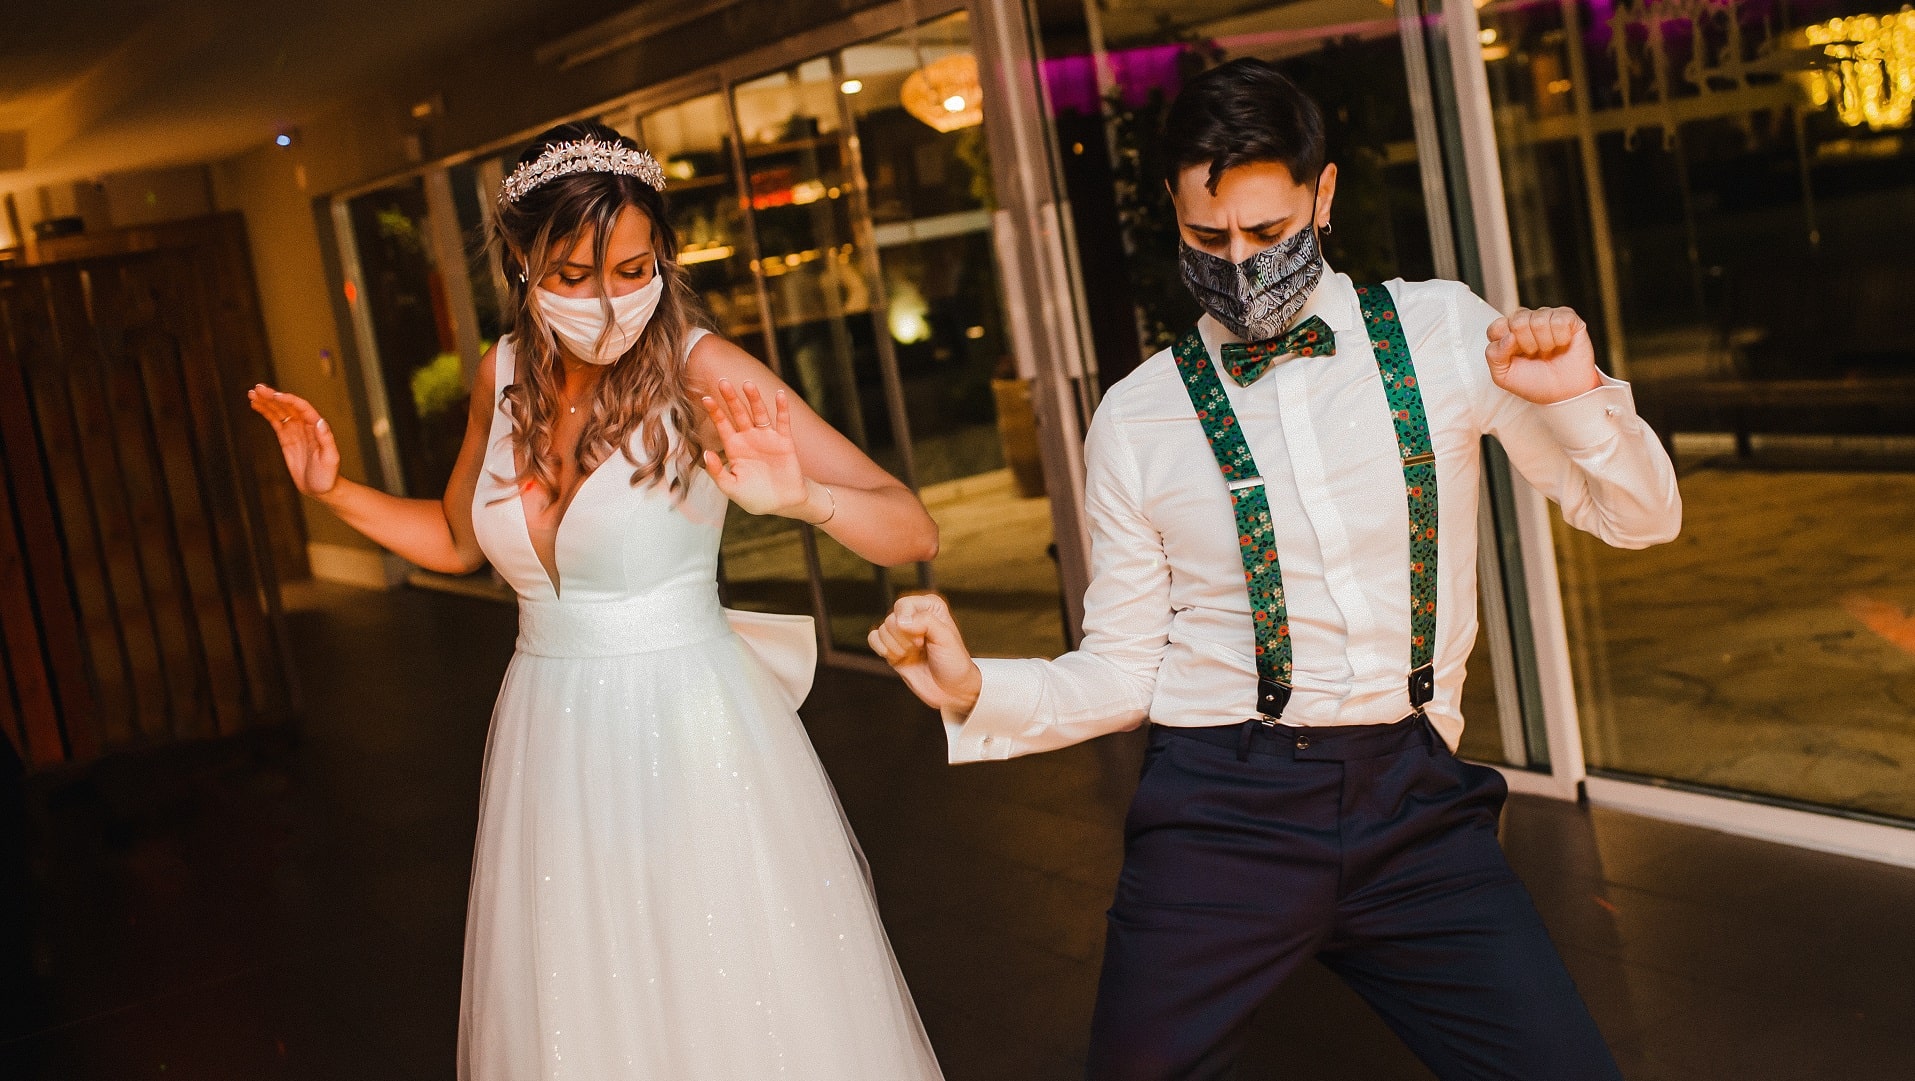 wedding couple dances together wearing masks